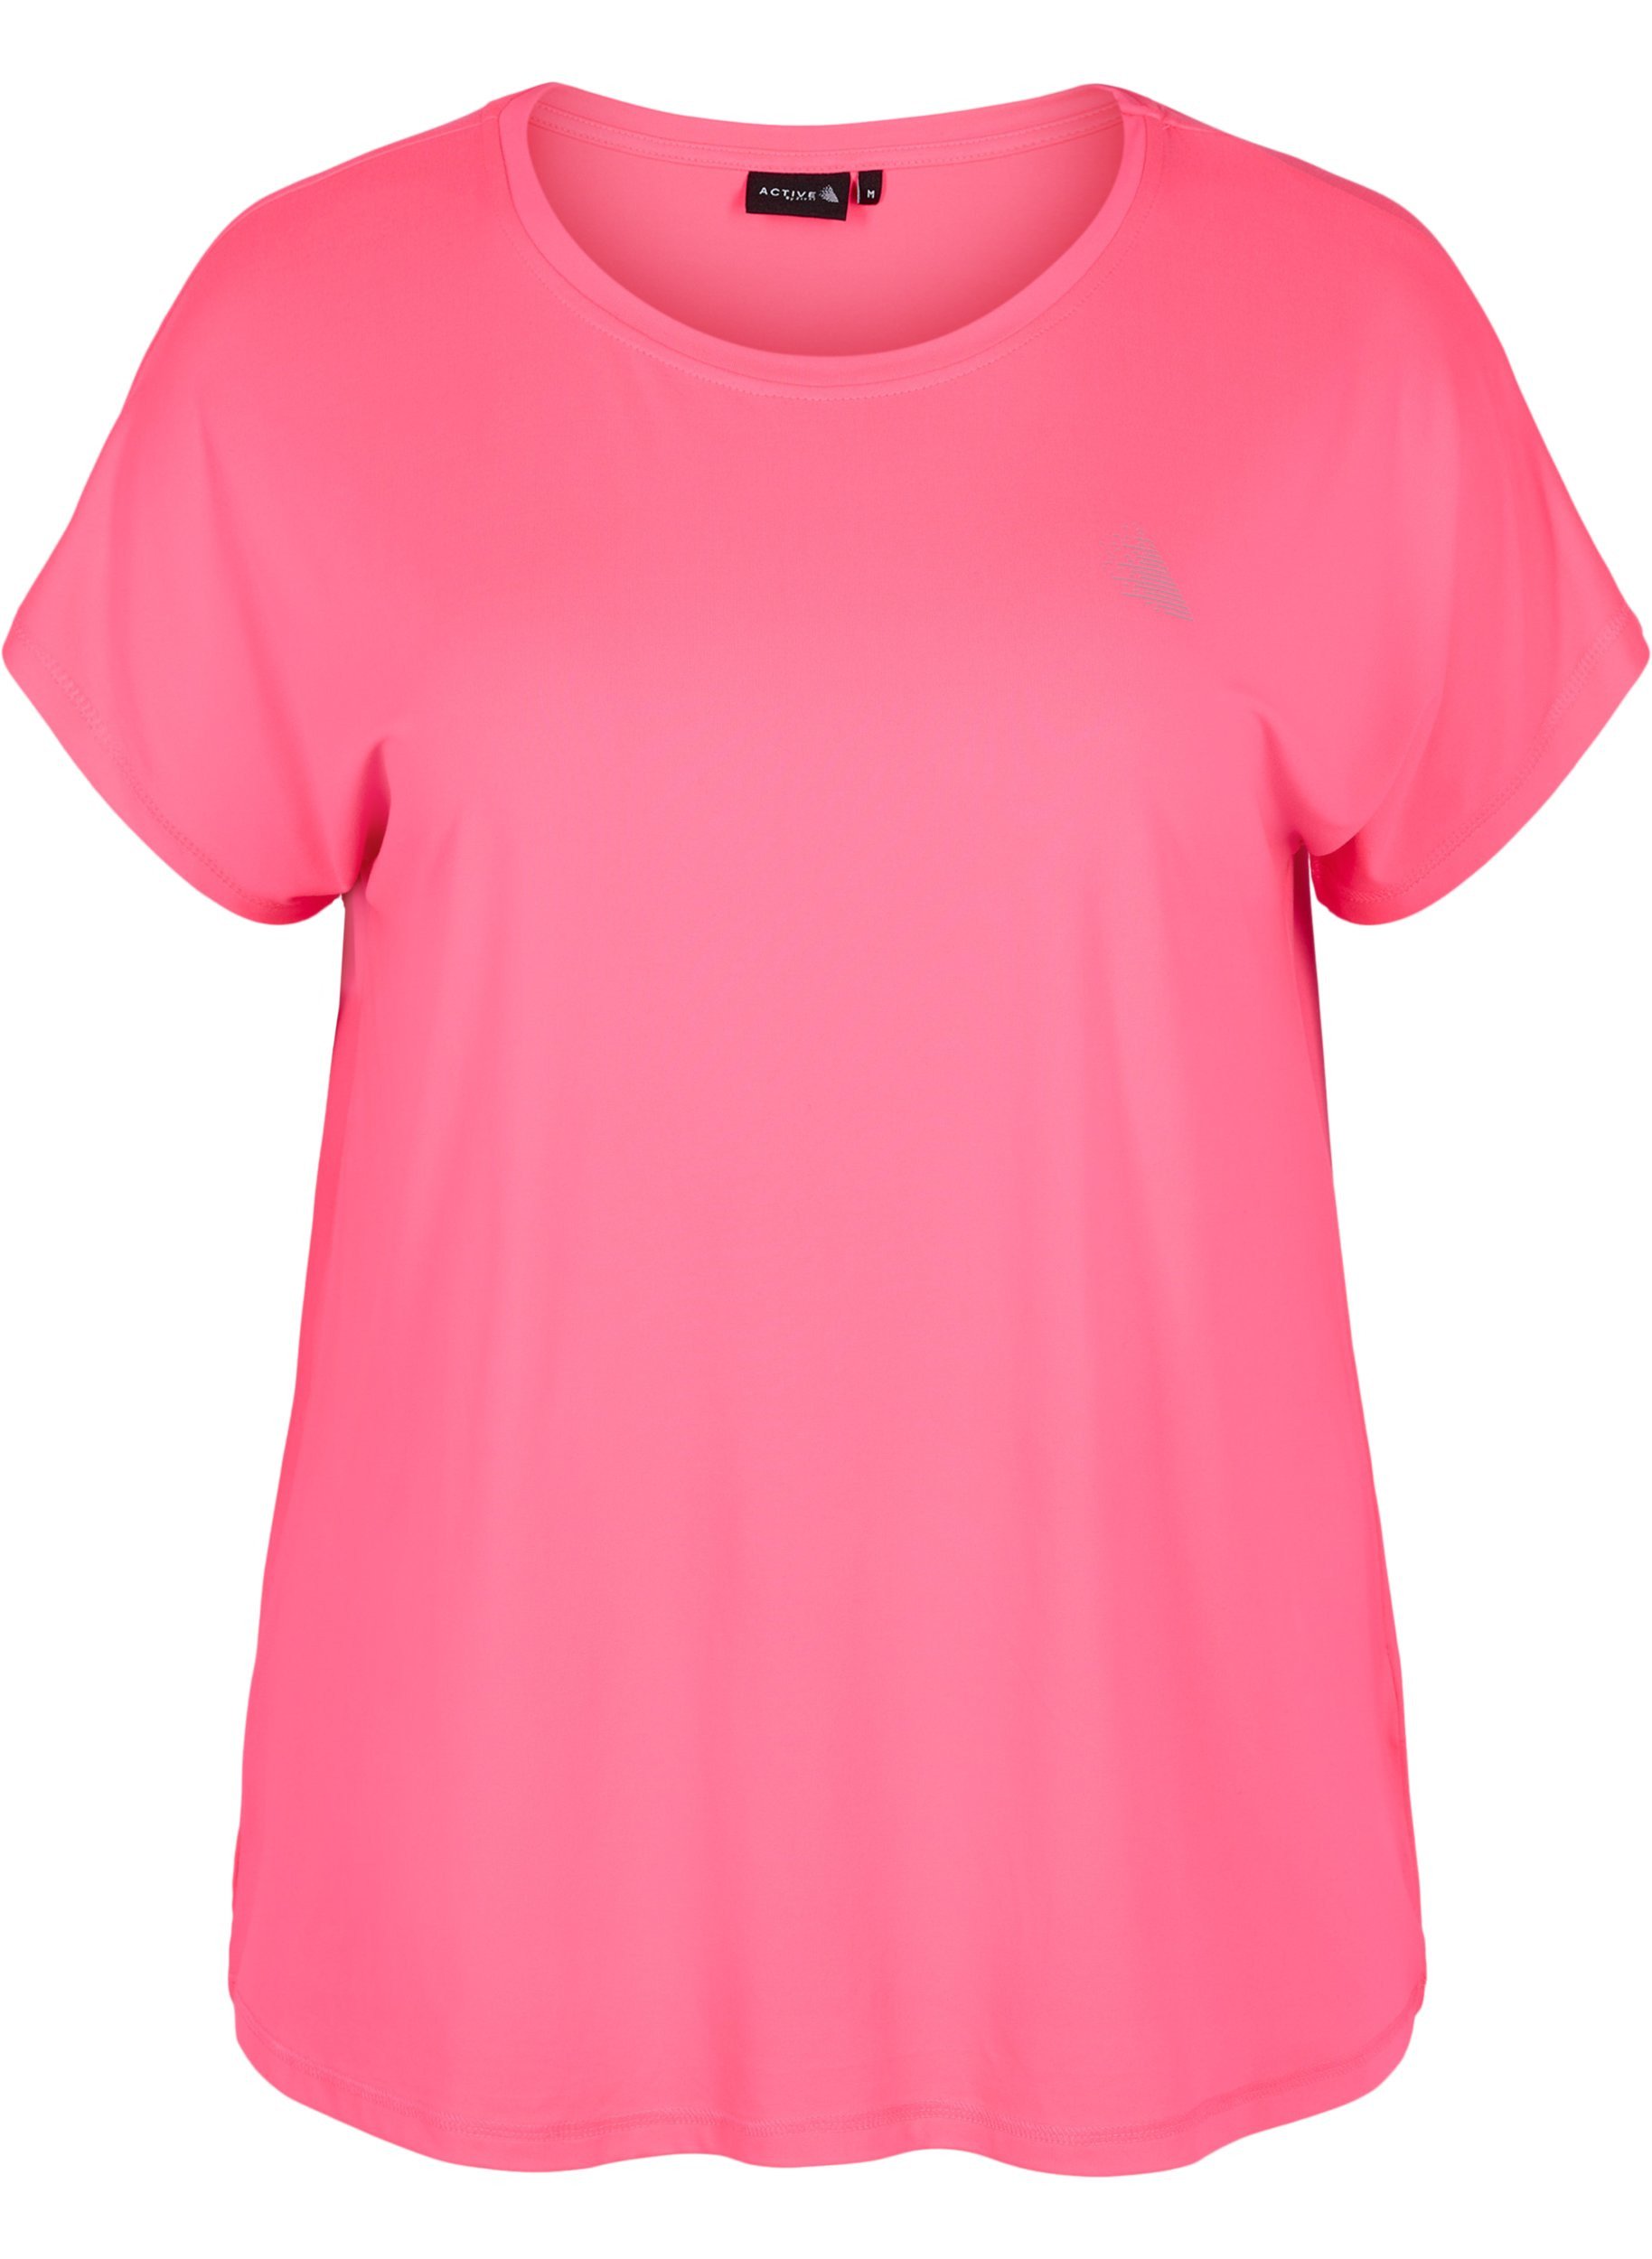 T-shirt, Neon pink